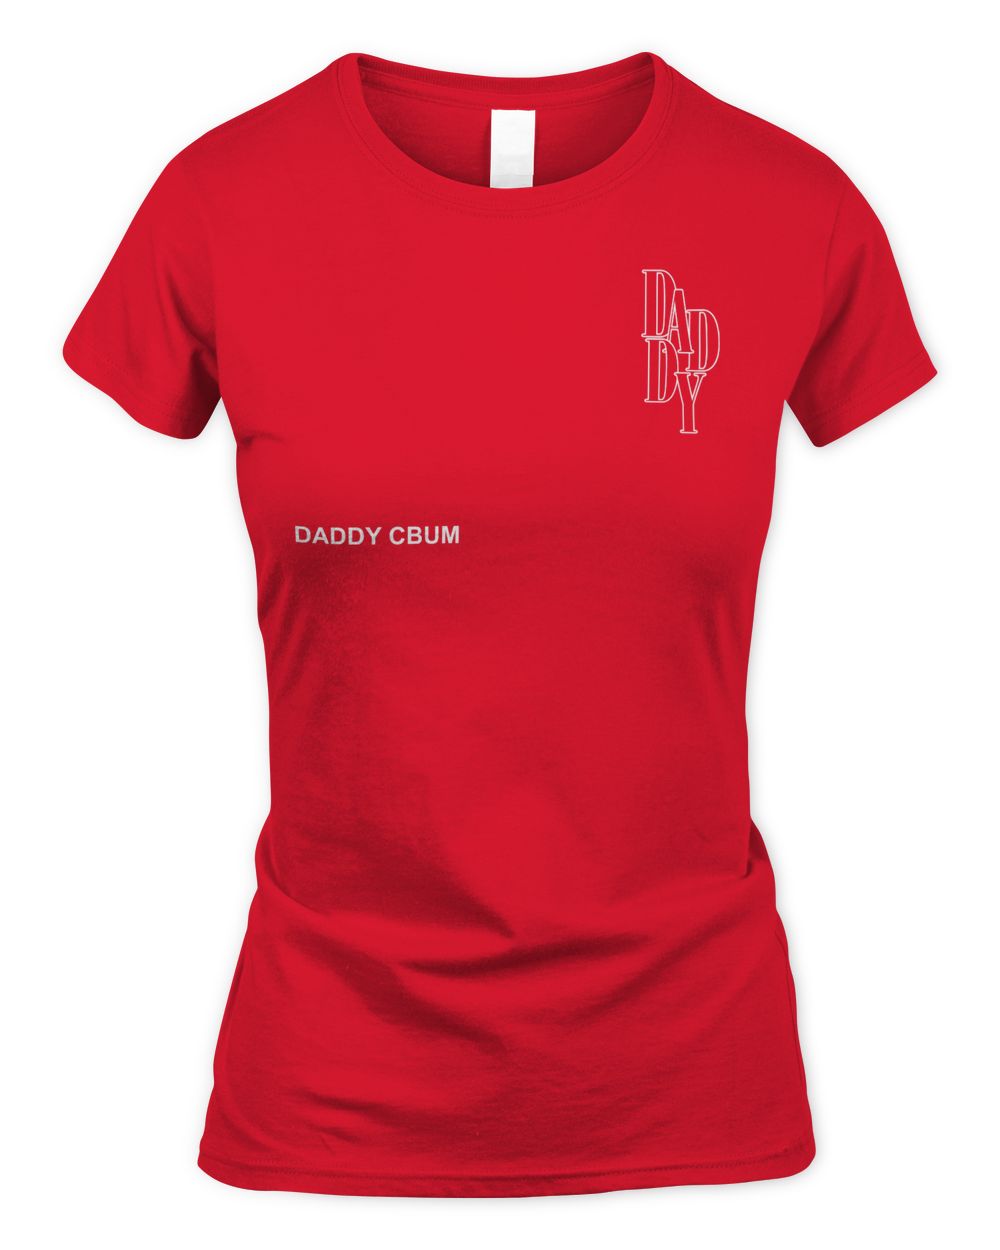 Cbum Merch Daddy Cbum Shirt Women's Soft Style Fitted T-Shirt red 